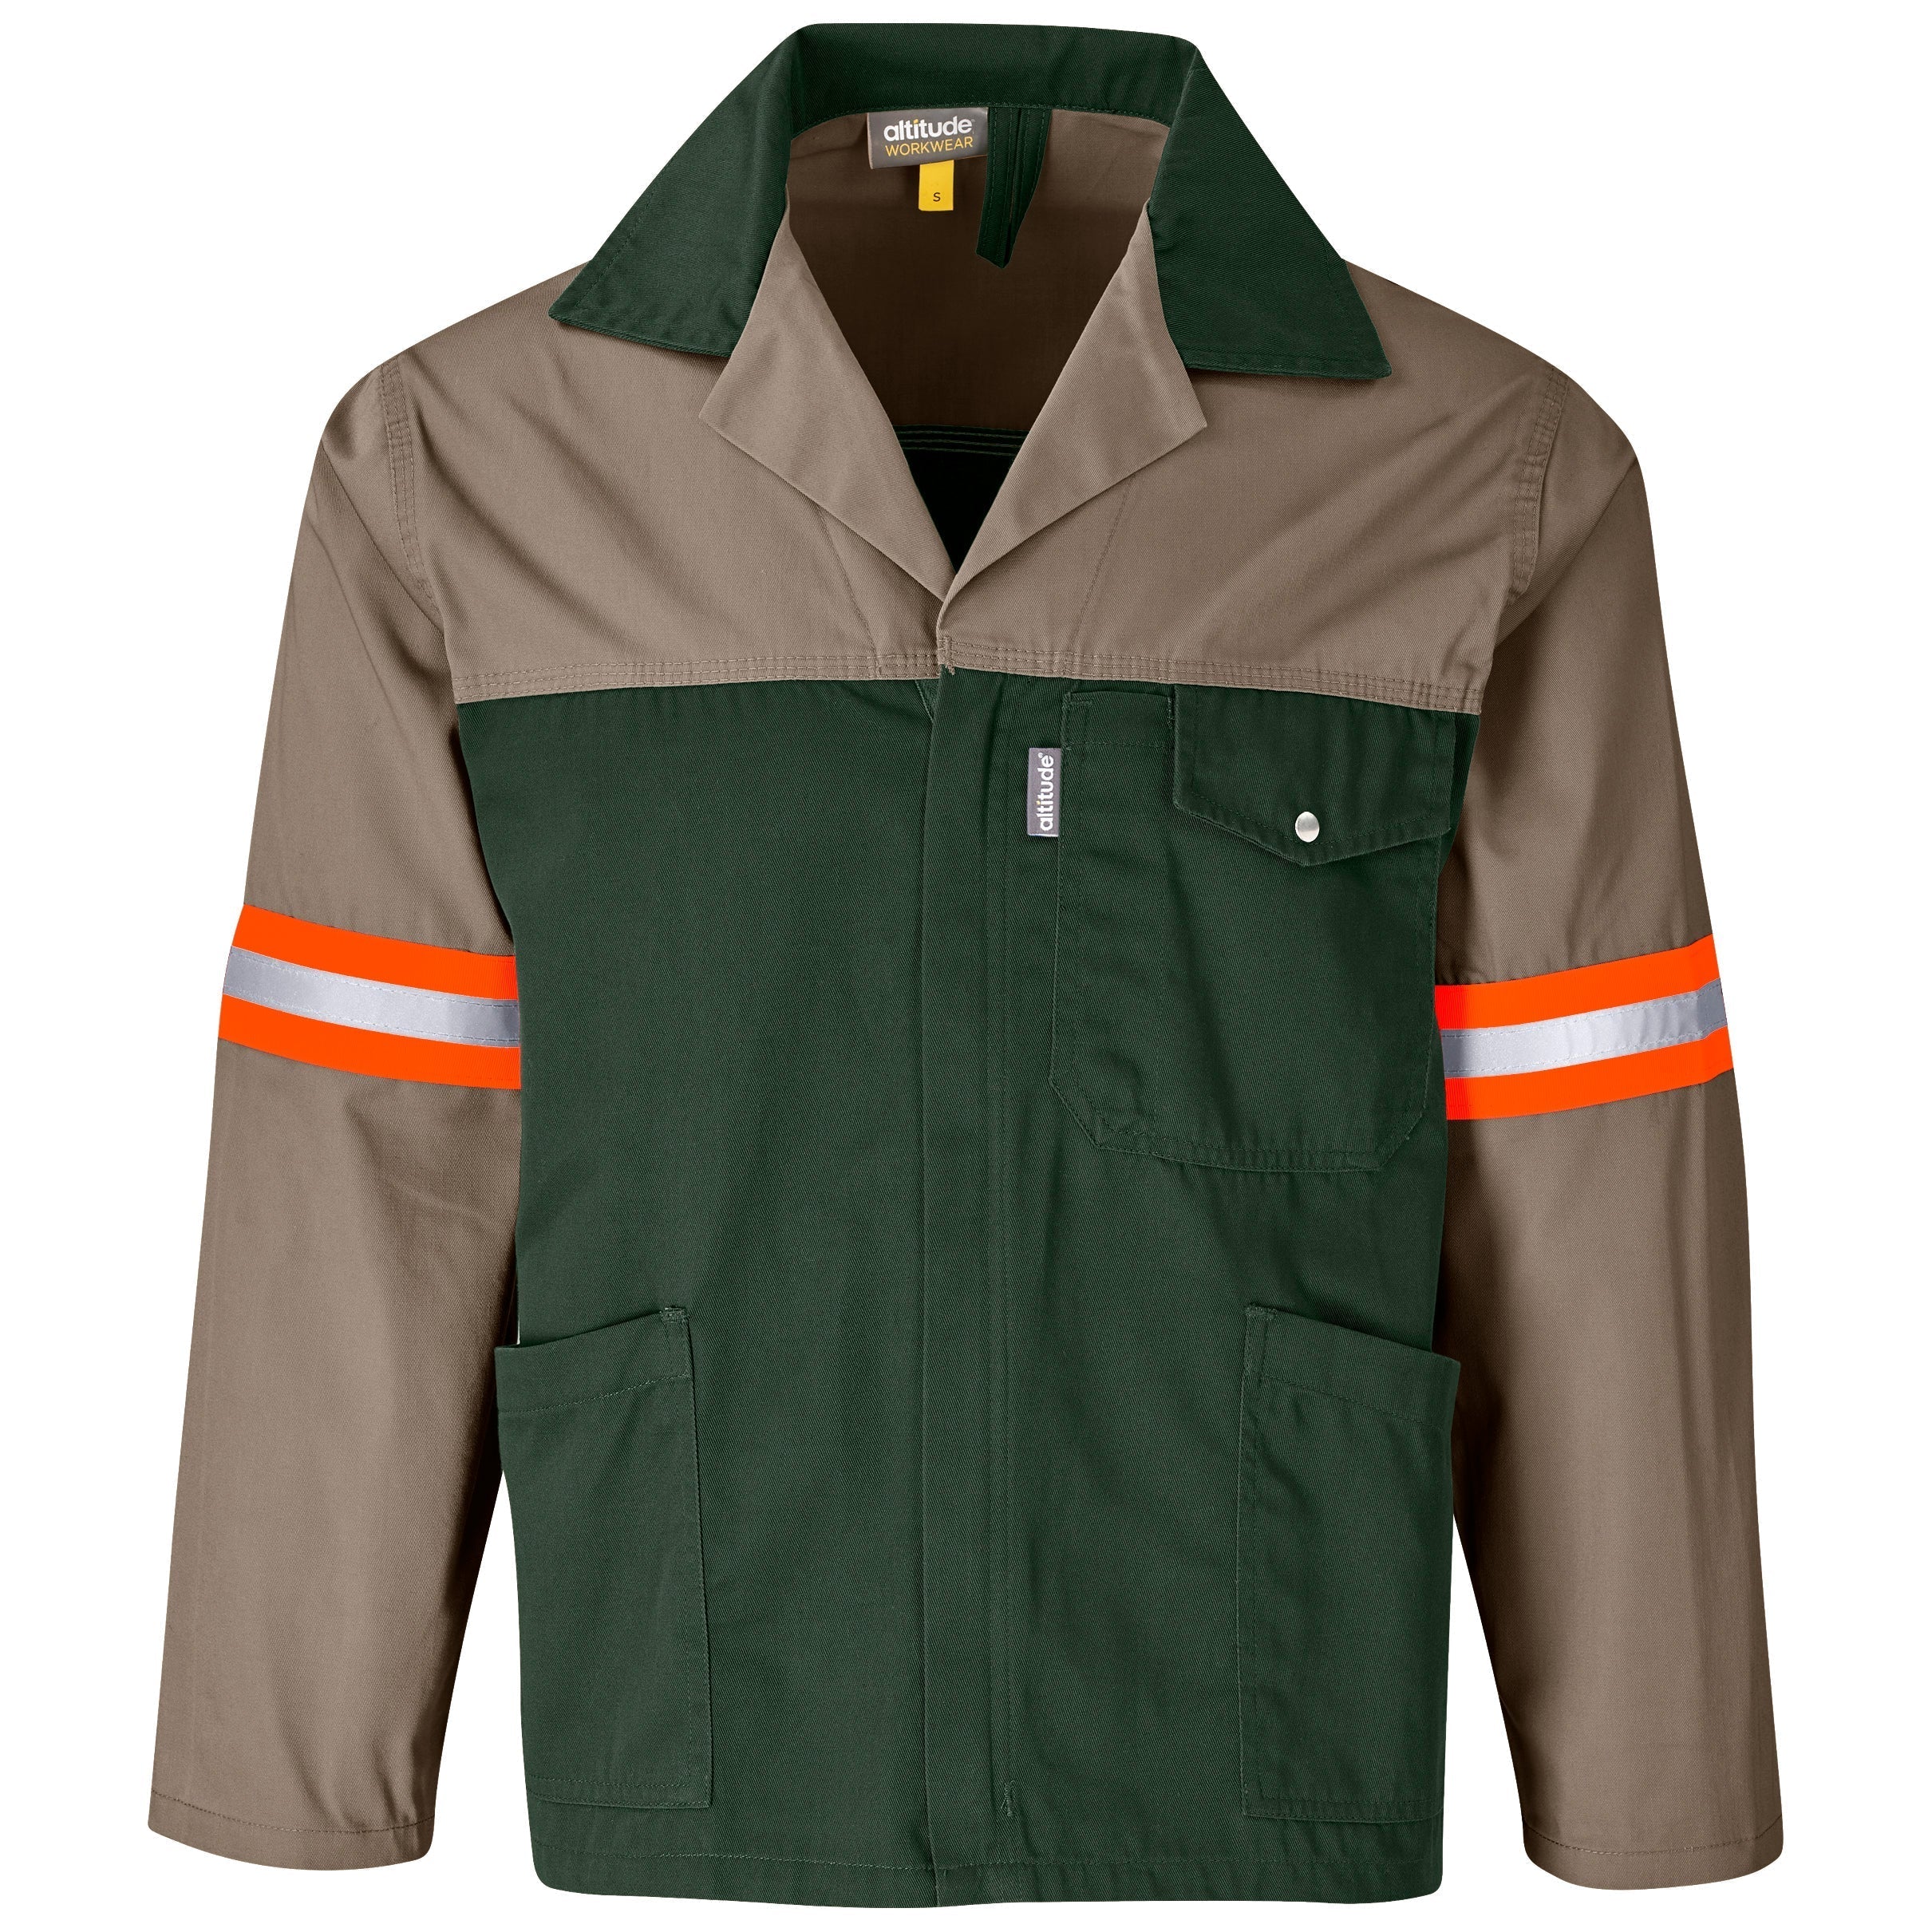 Site Premium Two-Tone Polycotton Jacket - Reflective Arms & Back - Orange Tape-L-Khaki-KH